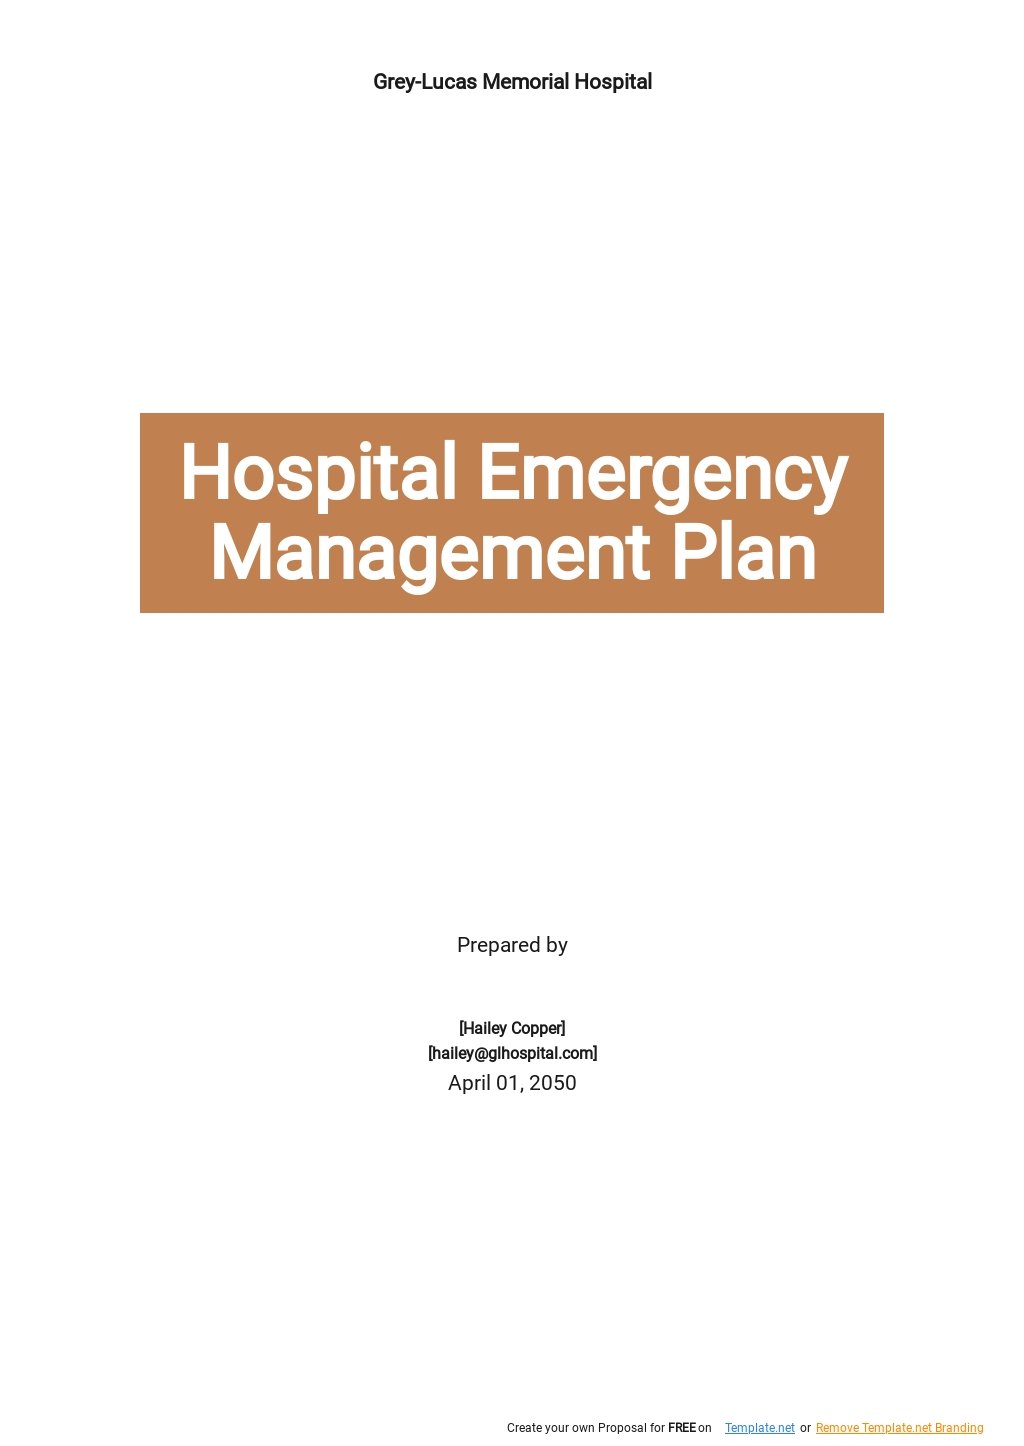 Hospital Emergency Management Plan Template.jpe